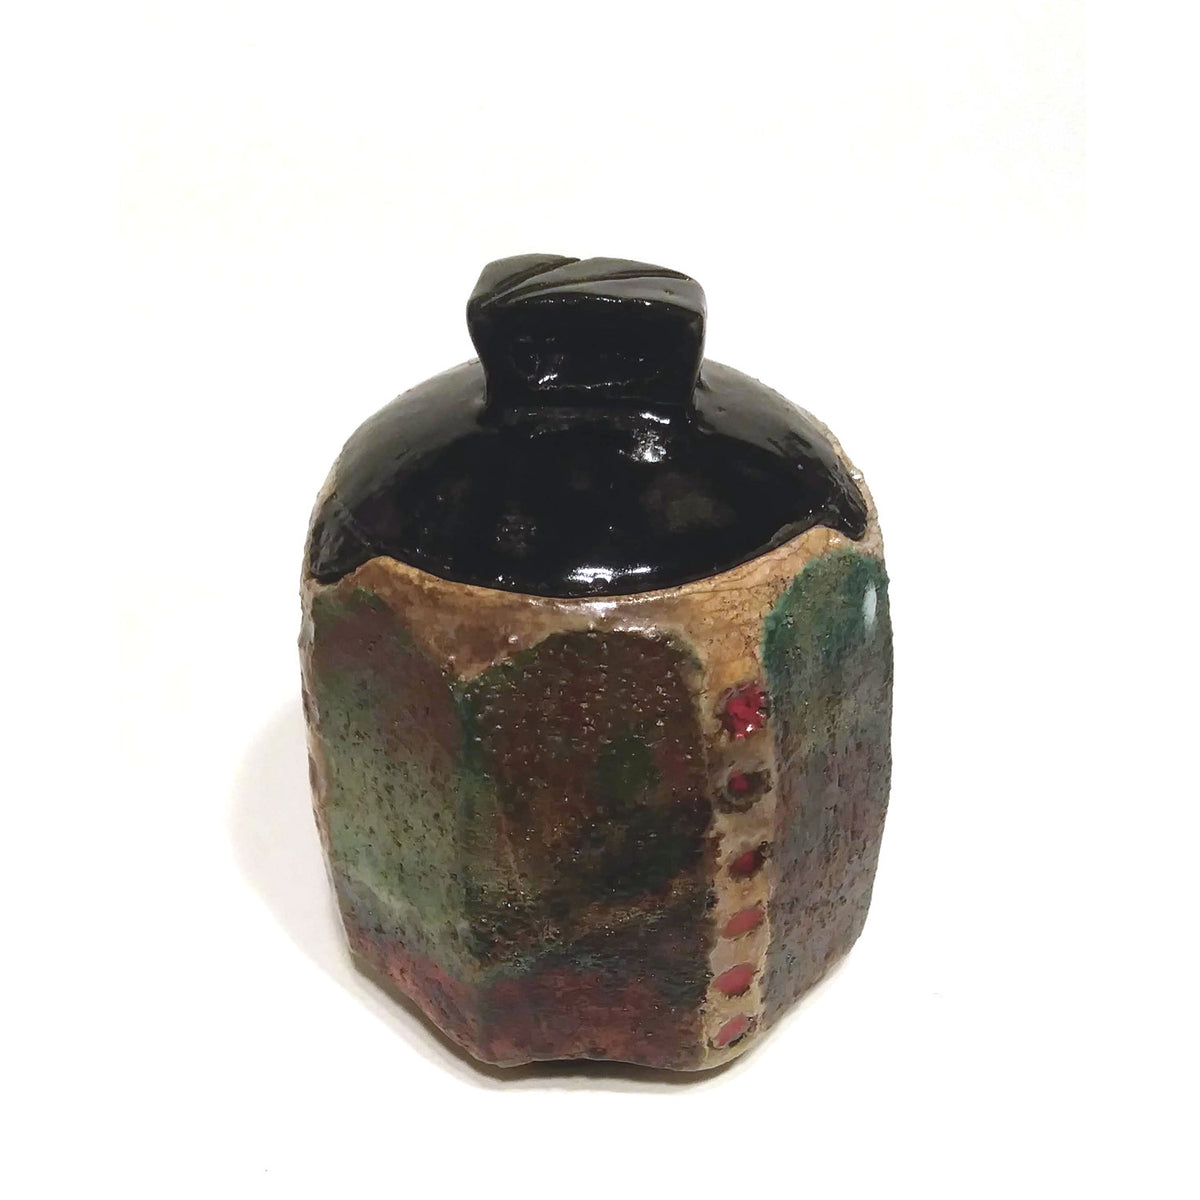 richard & susan surette - bronze glaze jar with black lid